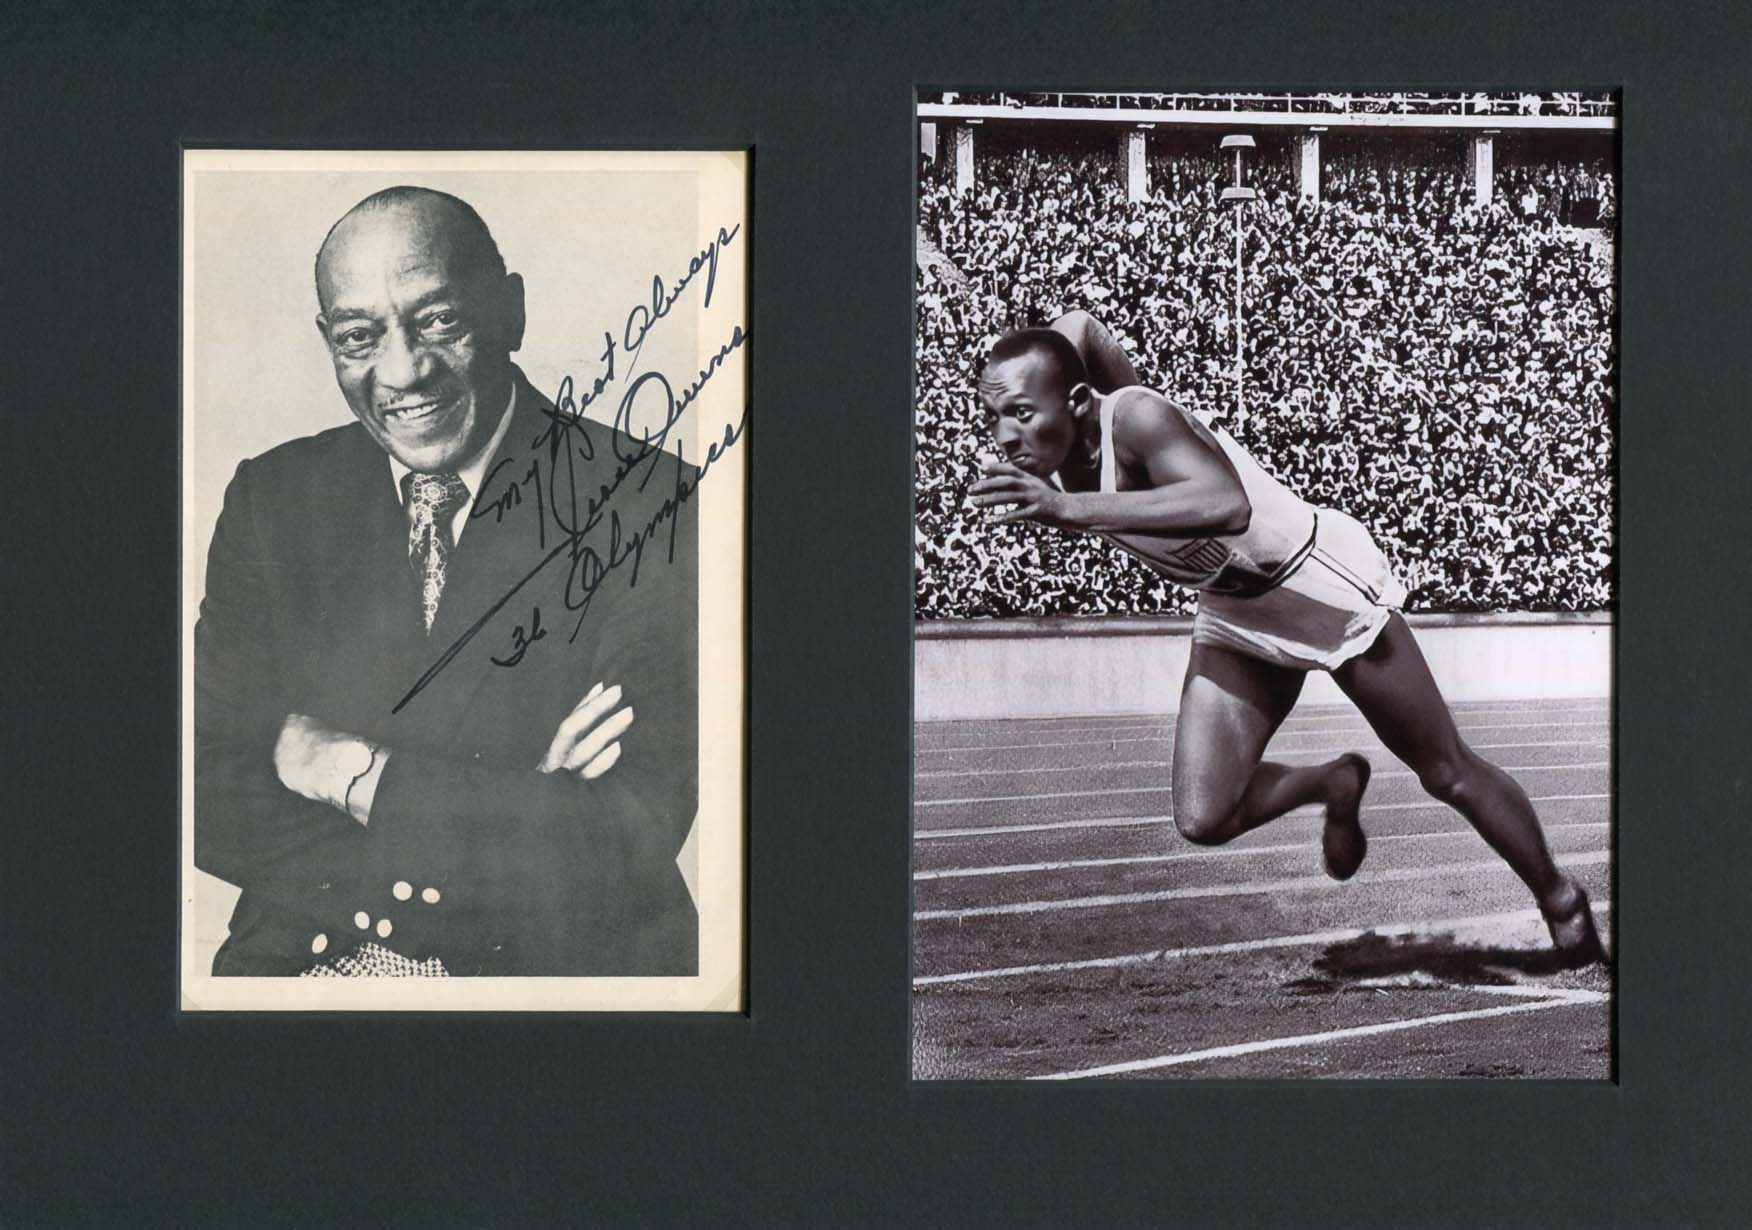 Jesse Owens Autograph Autogramm | ID 7865564037269